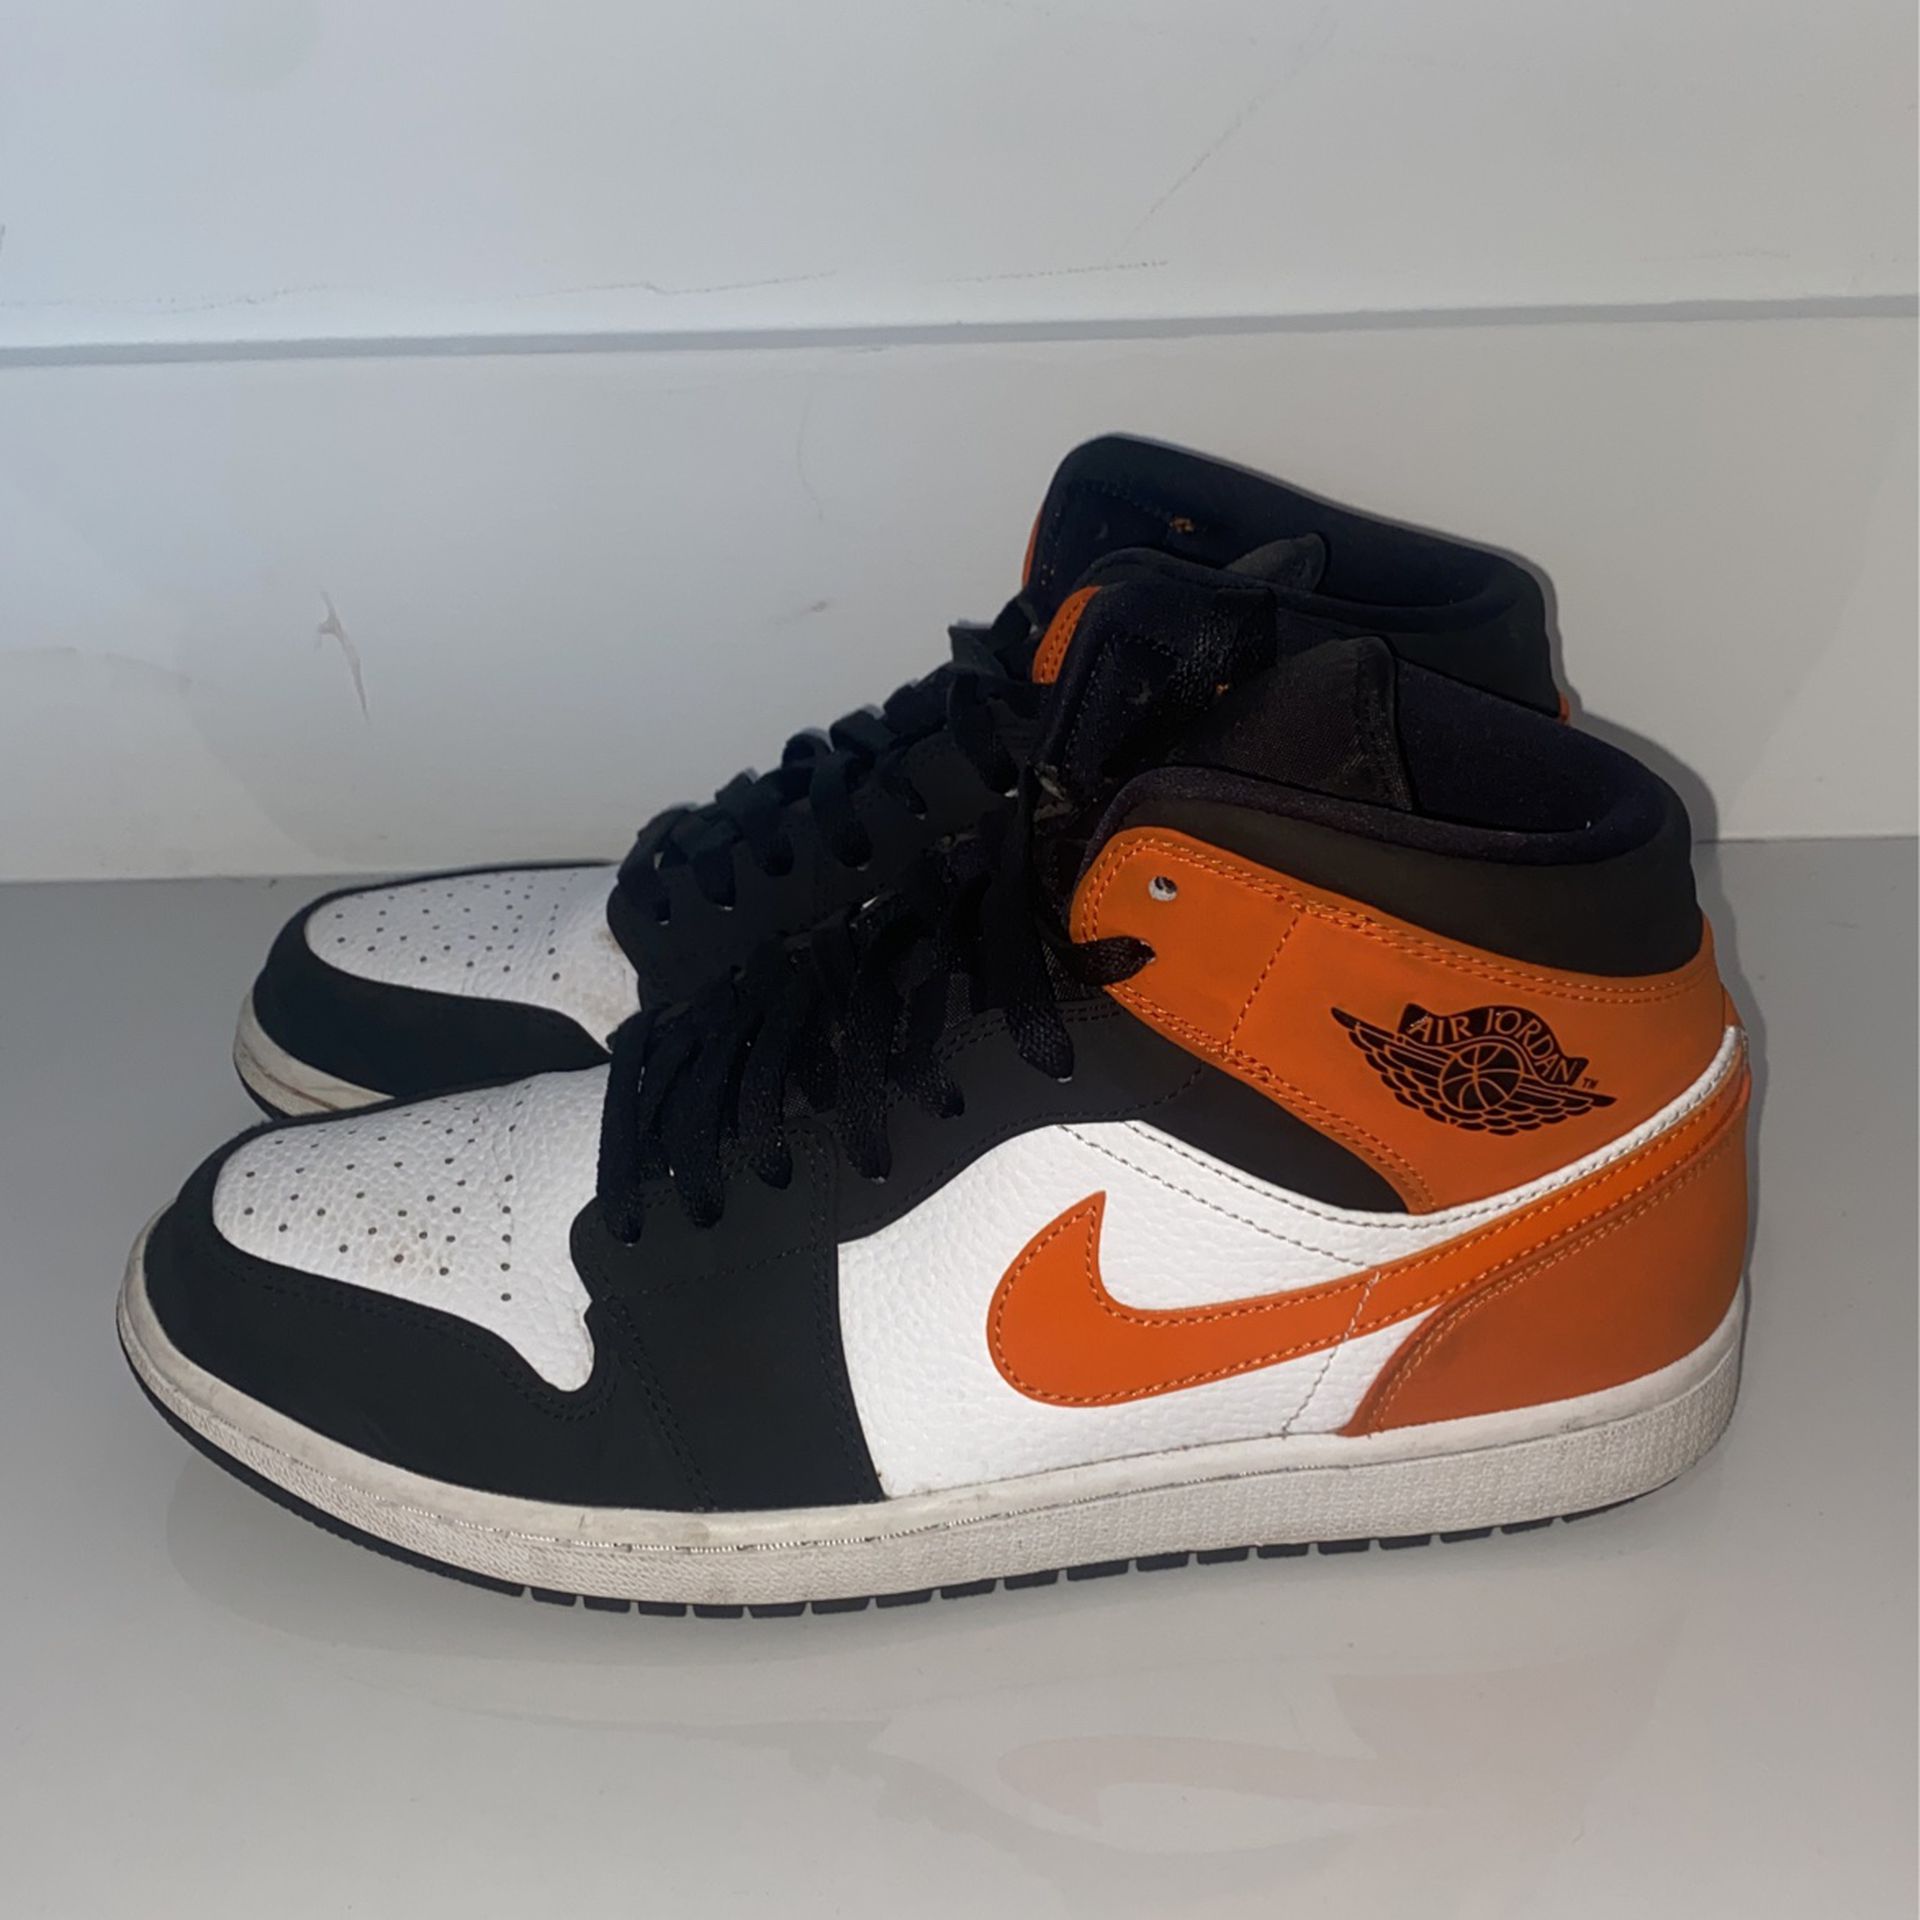 Used Men’s Air Jordan 1 Mid Retro Basketball Shoes (Size 10.5)